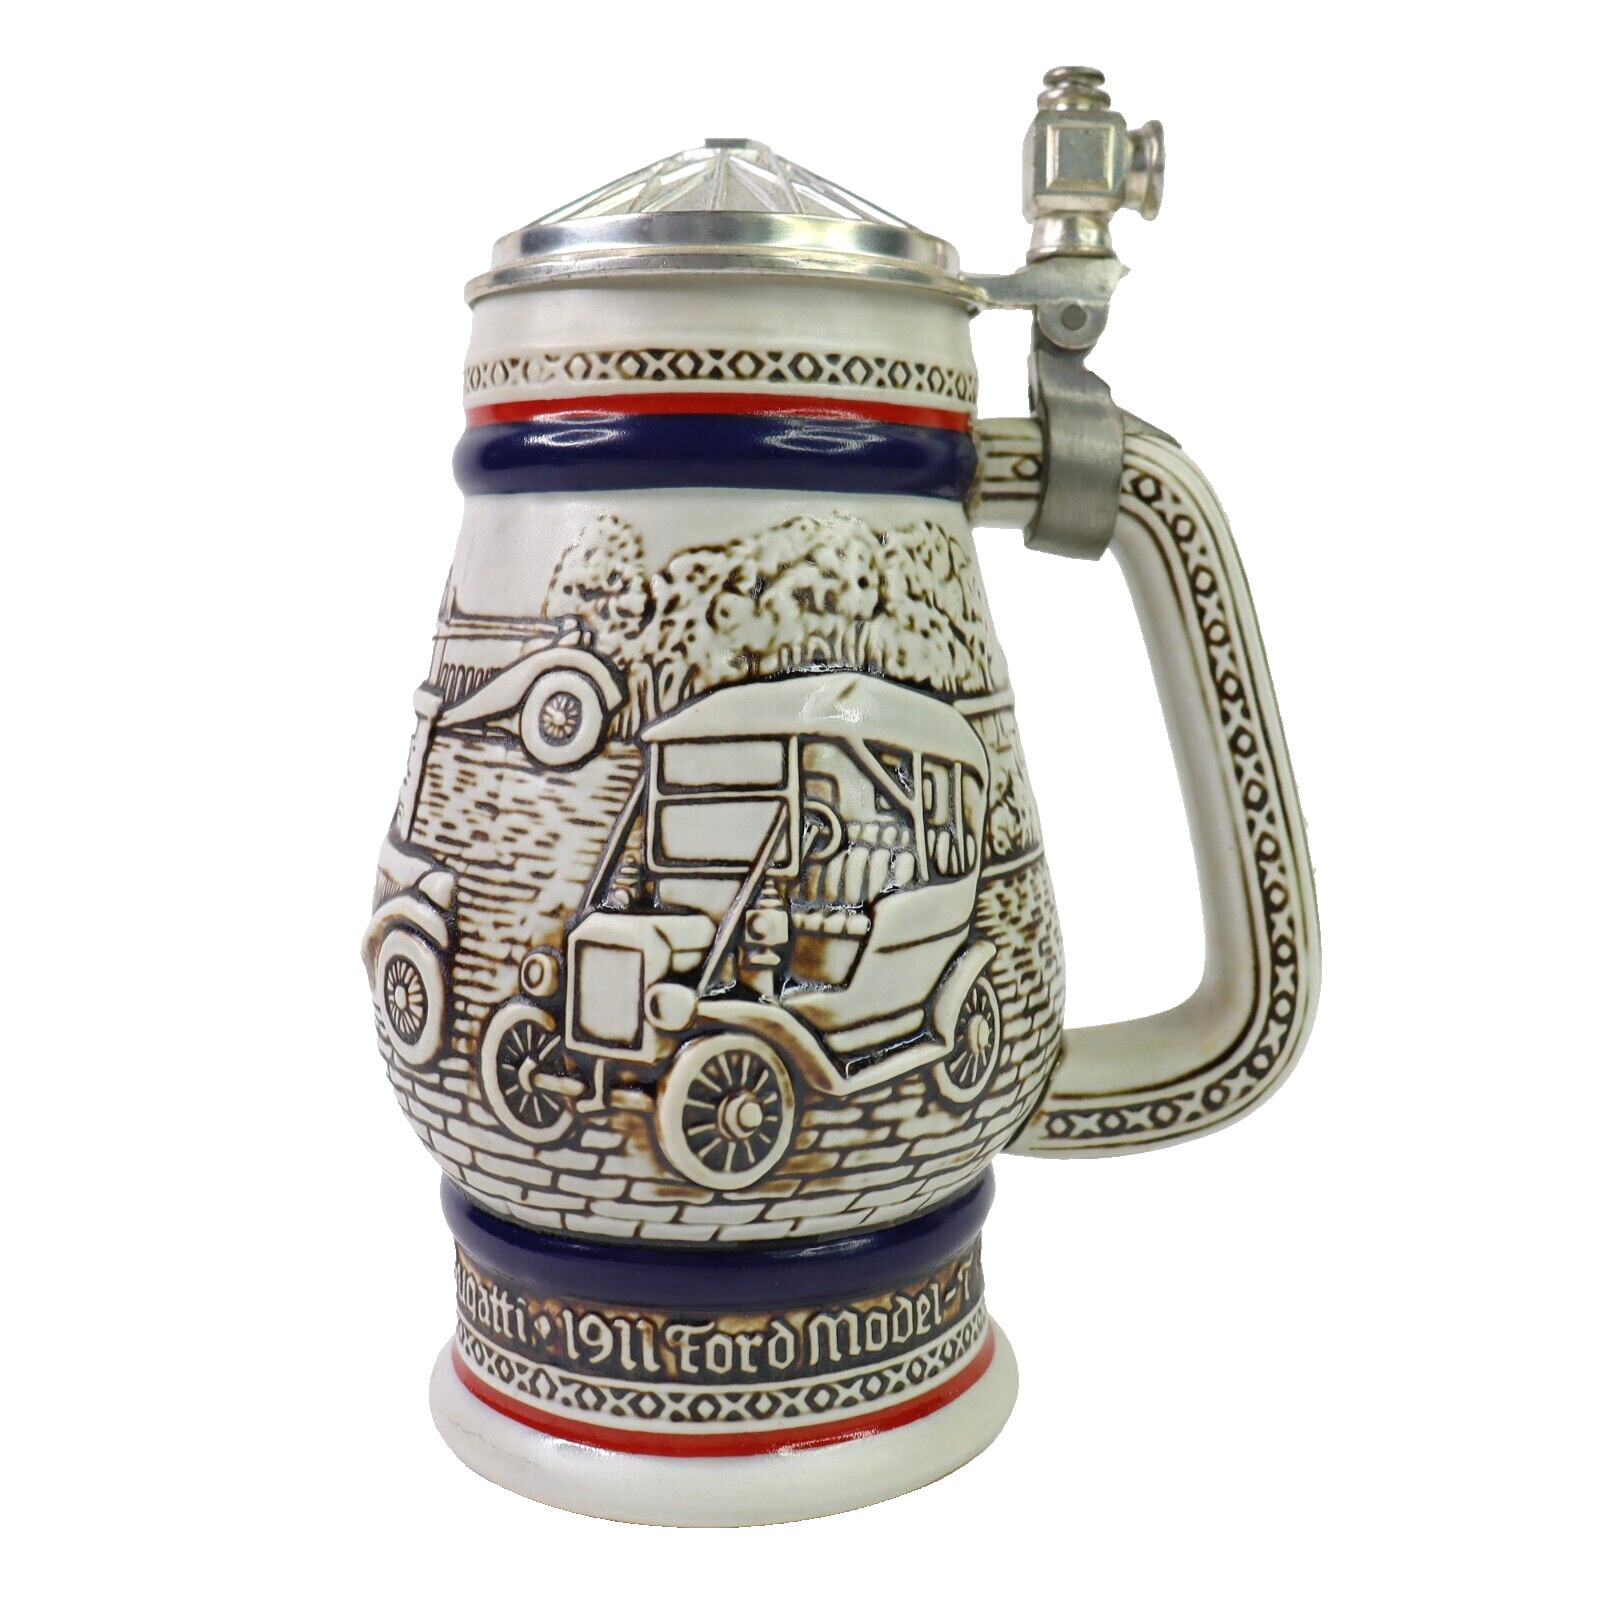 Vintage 1979 Avon Automobile Beer Stein Old Mug Handcrafted in Brazil Caramarte